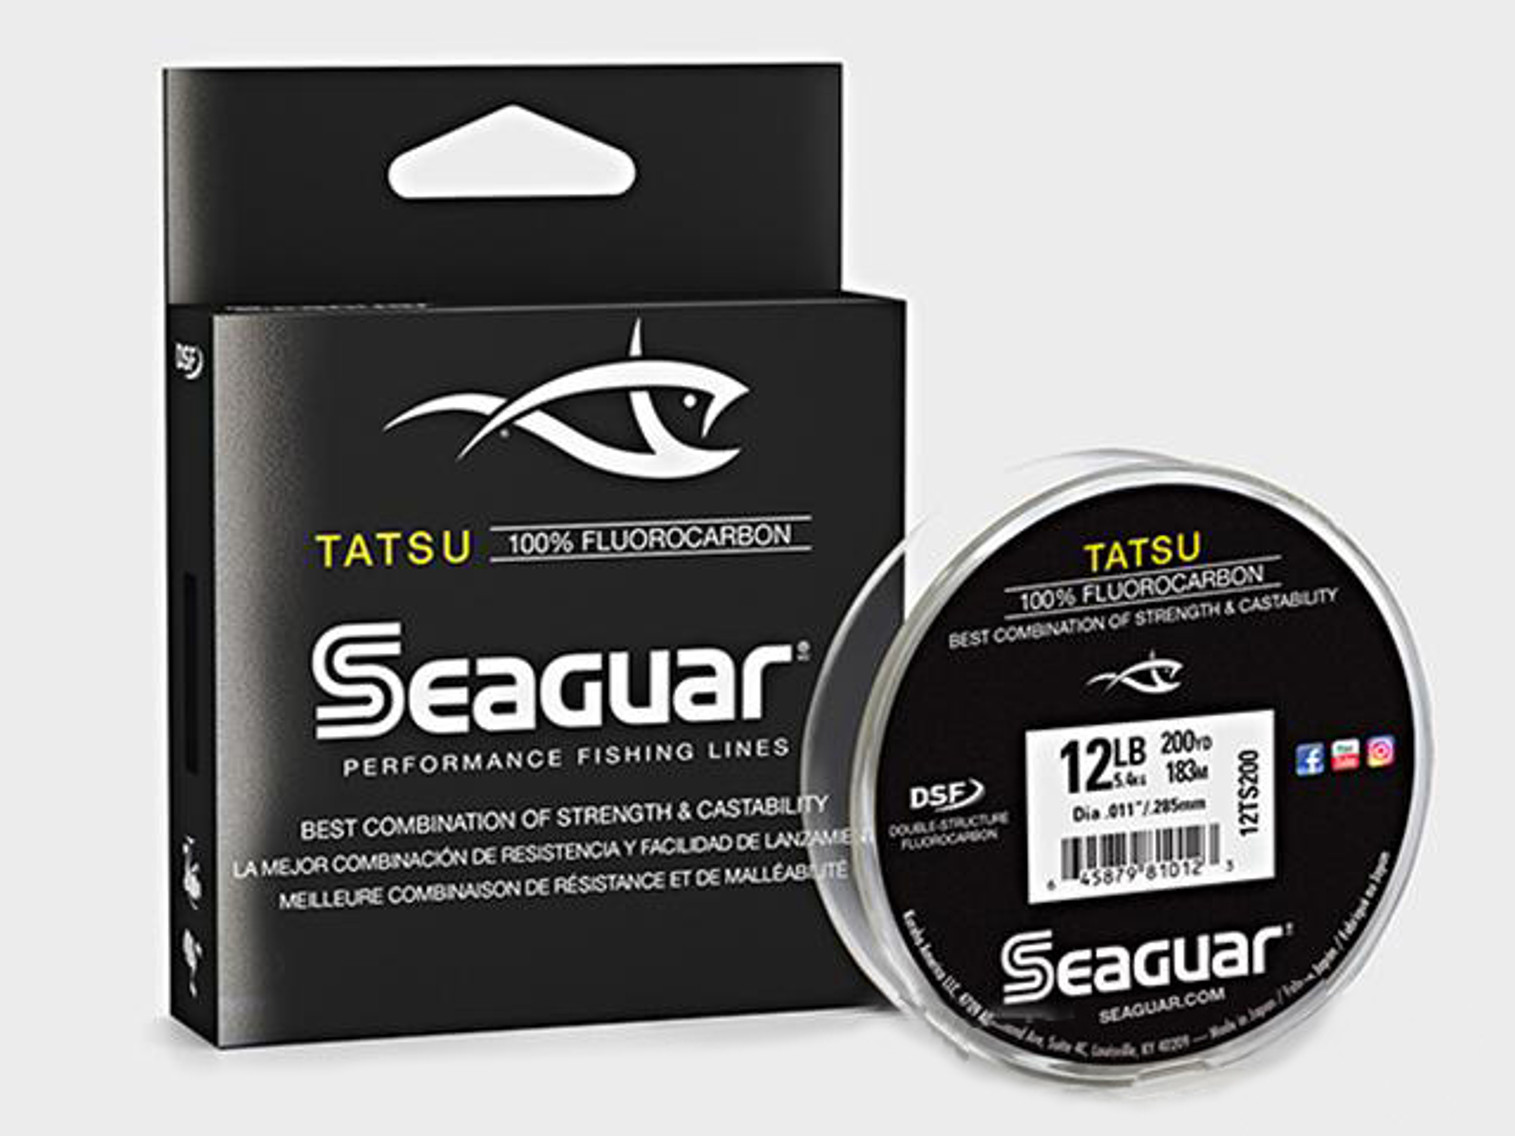 Seaguar Tatsu 100% Fluorocarbon Leader Material